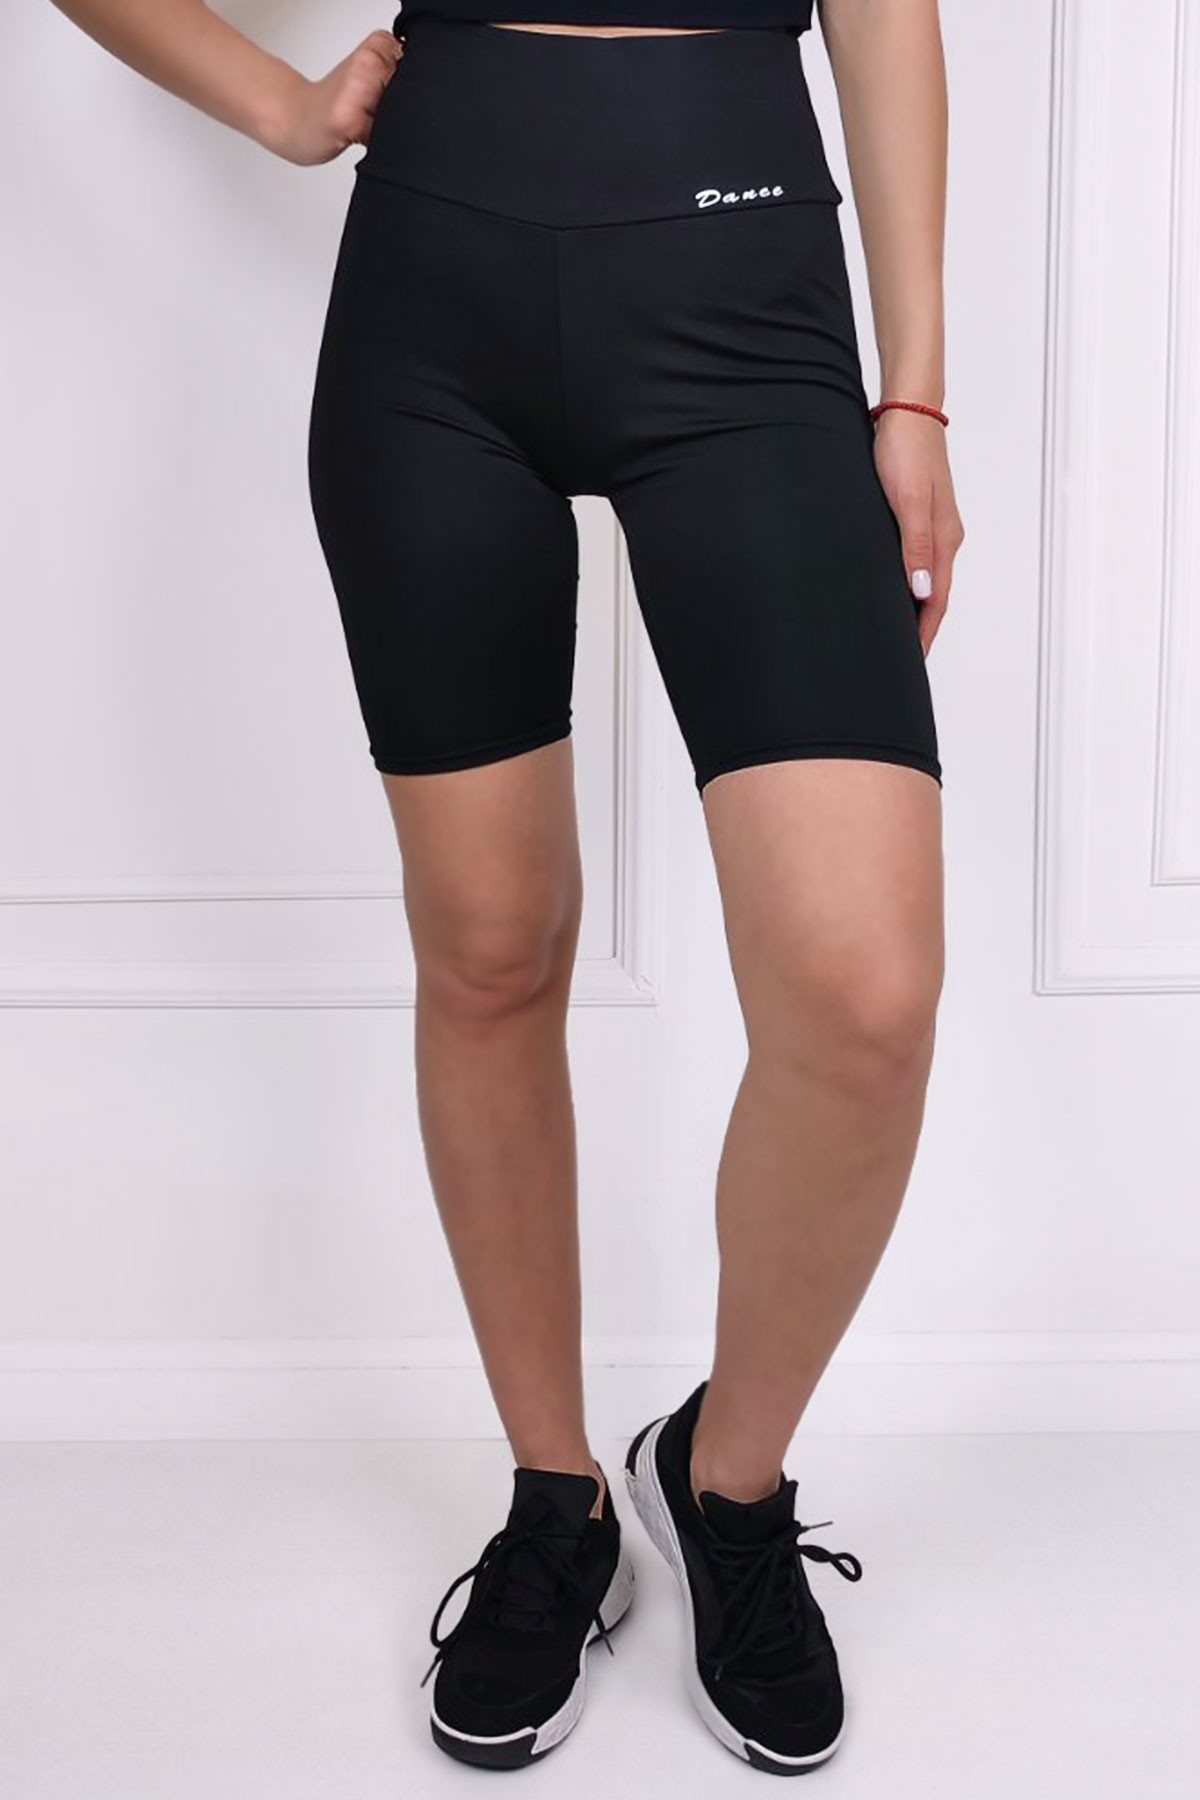 Digsel women cycling shorts | cotton shorts | tights shorts Pack of 2